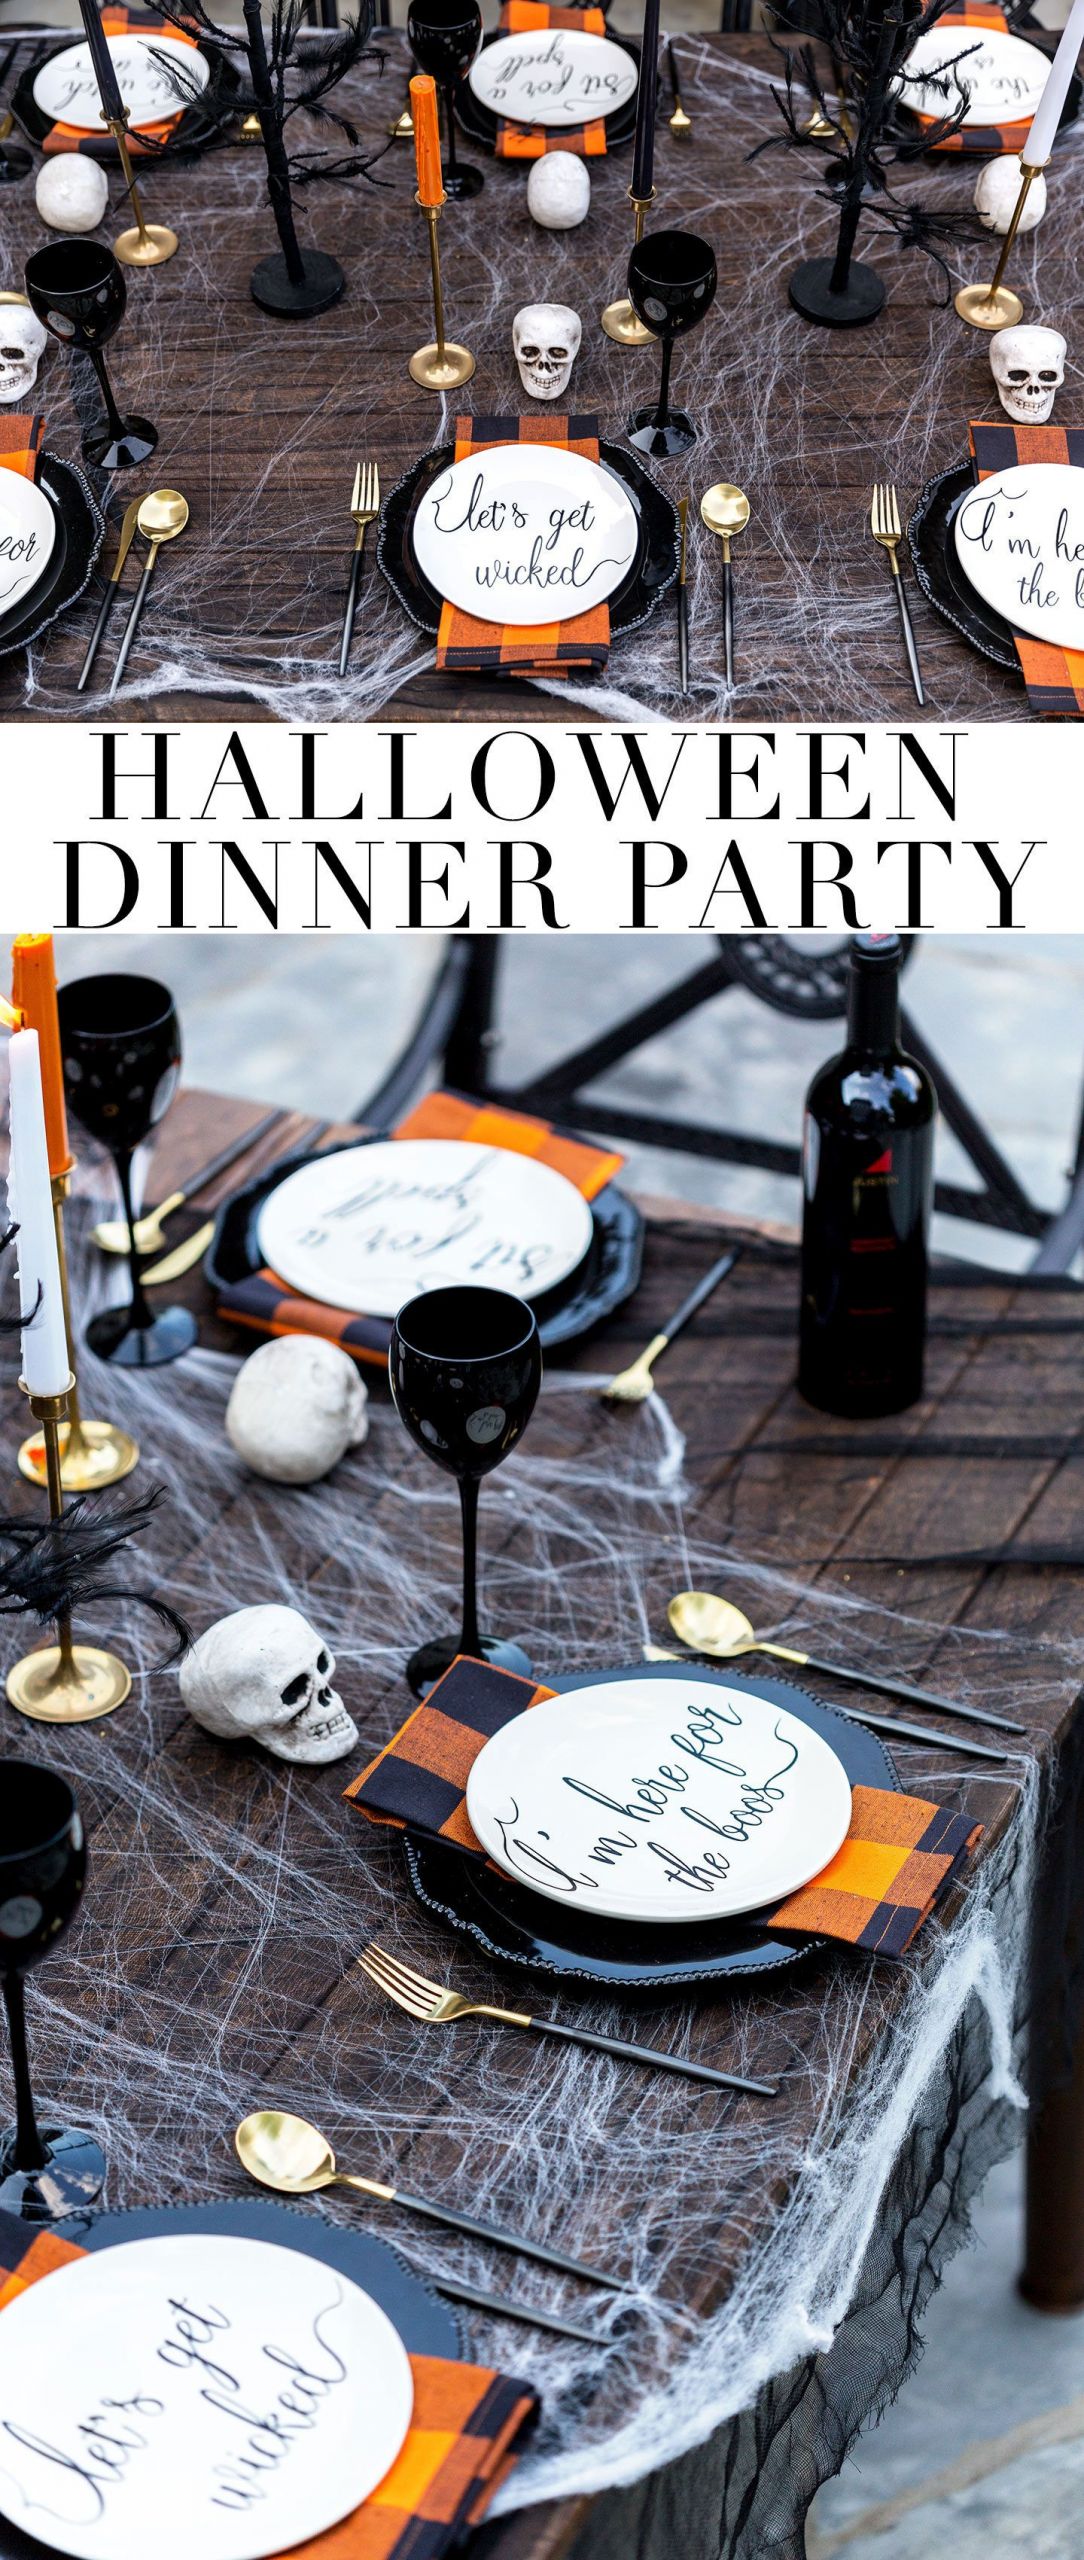 Dinner Party Menu Ideas For 6
 Halloween Dinner Party & Menu Ideas